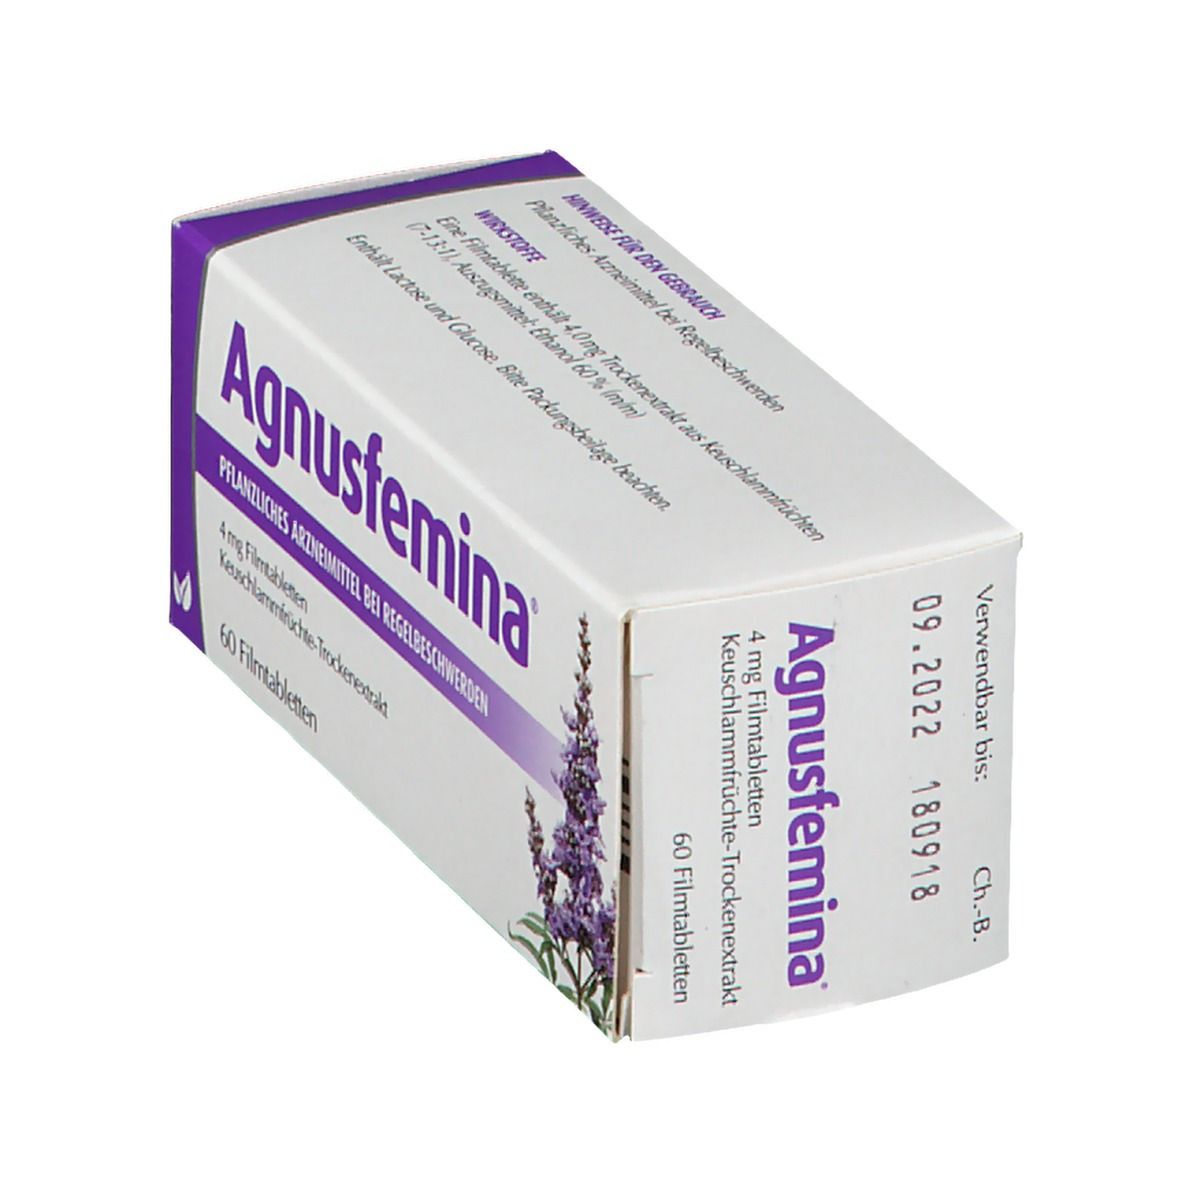 Agnusfemina® 4 mg